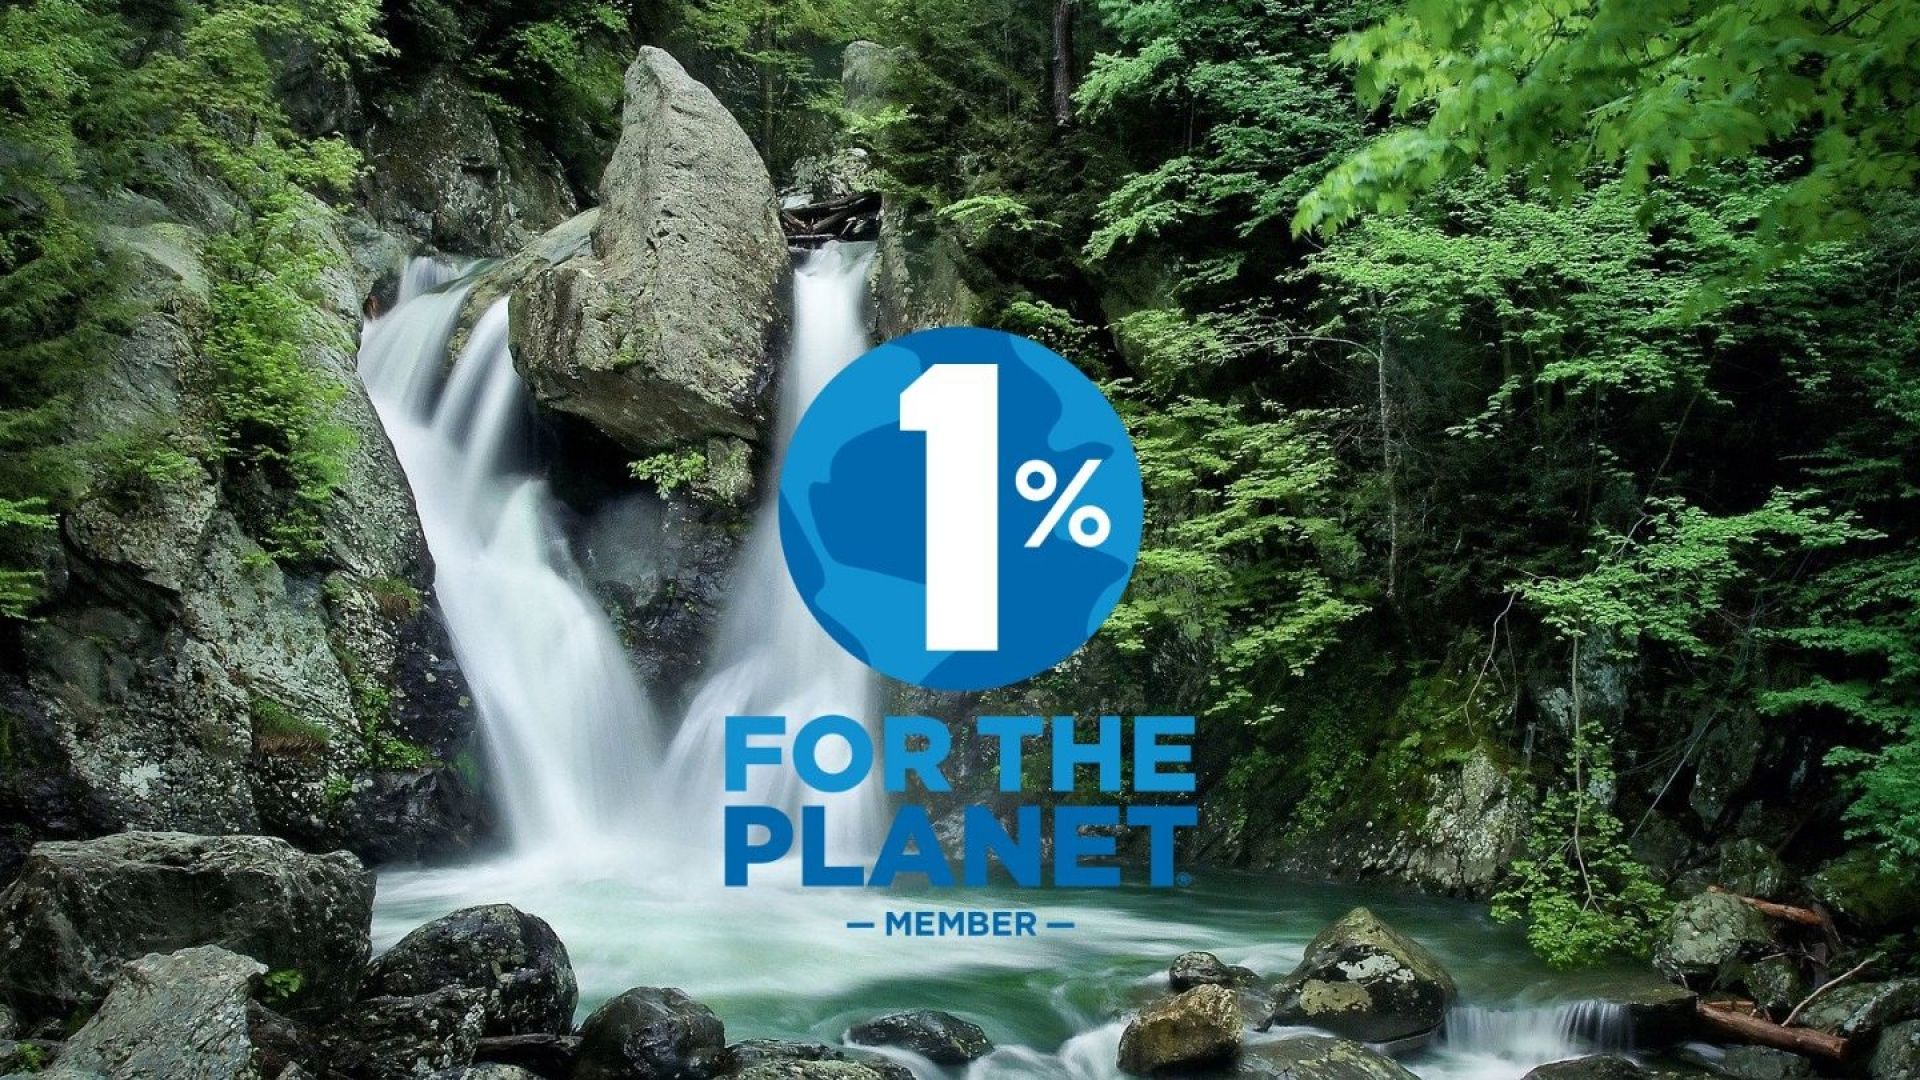 Ardeche canyon - paysage nature ruisseau chute d'eau 1% For The Planet